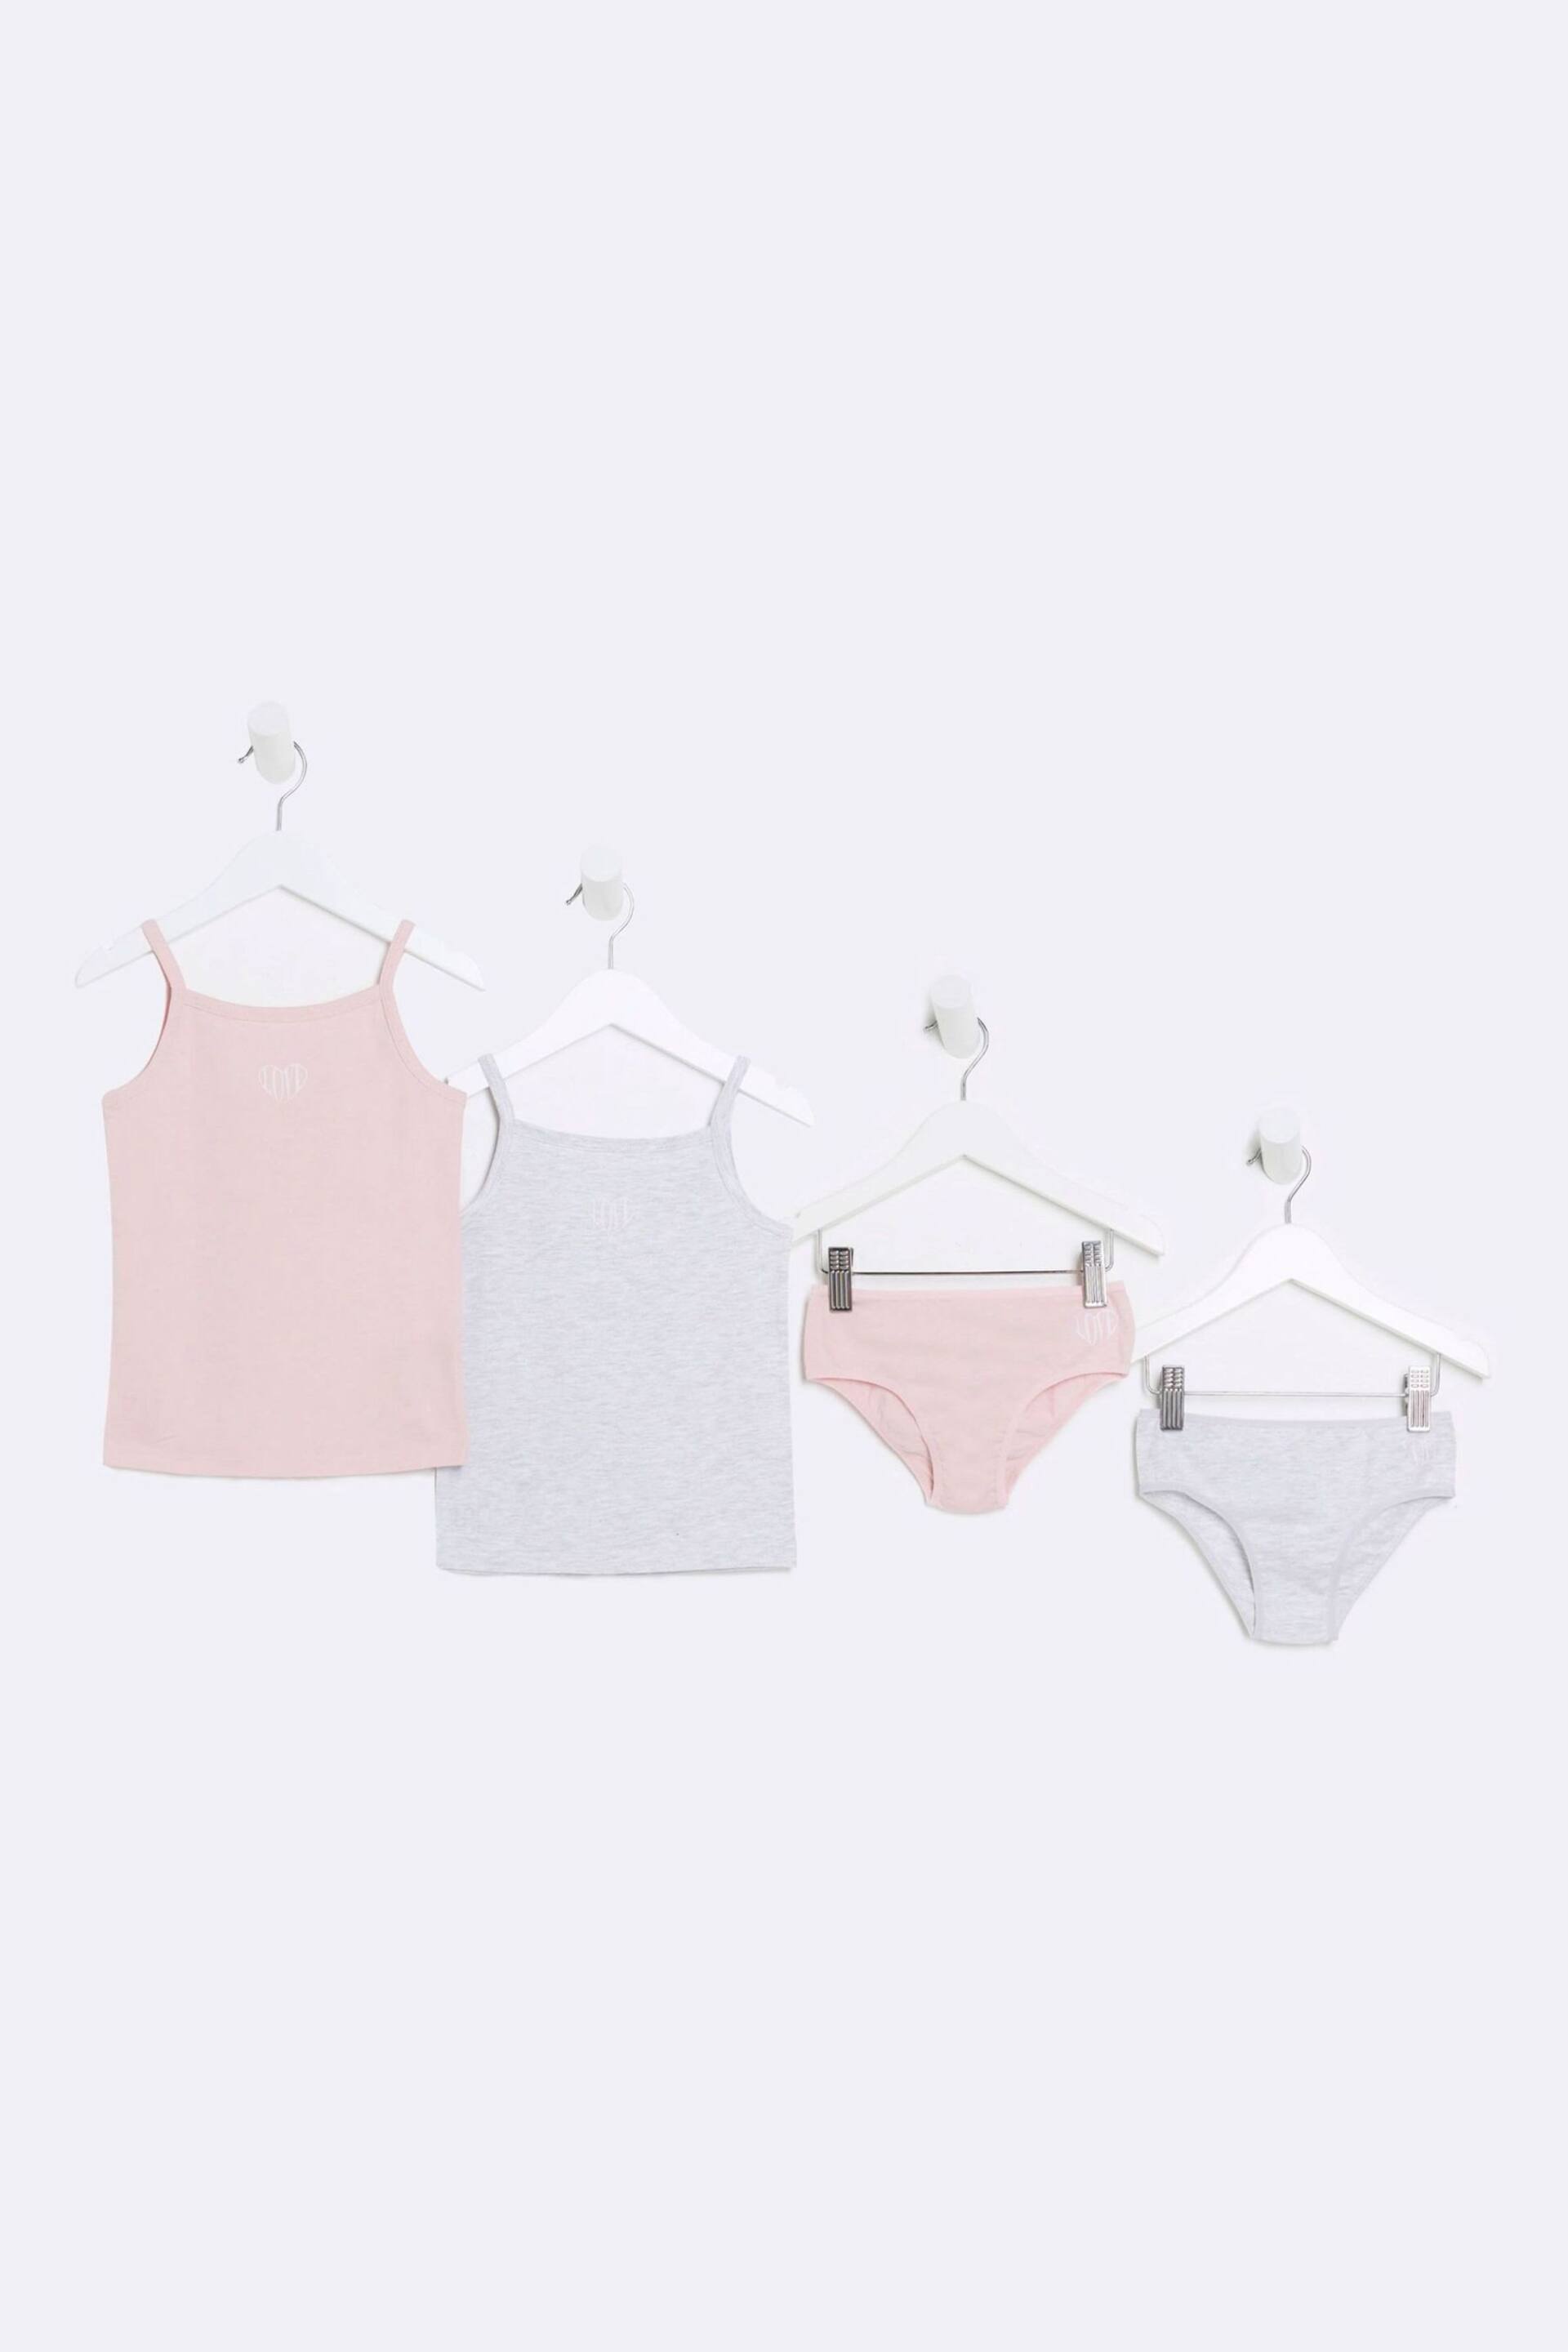 River Island Pink Girls Underwear Vests And Briefs 4 Piece Set - Image 1 of 4